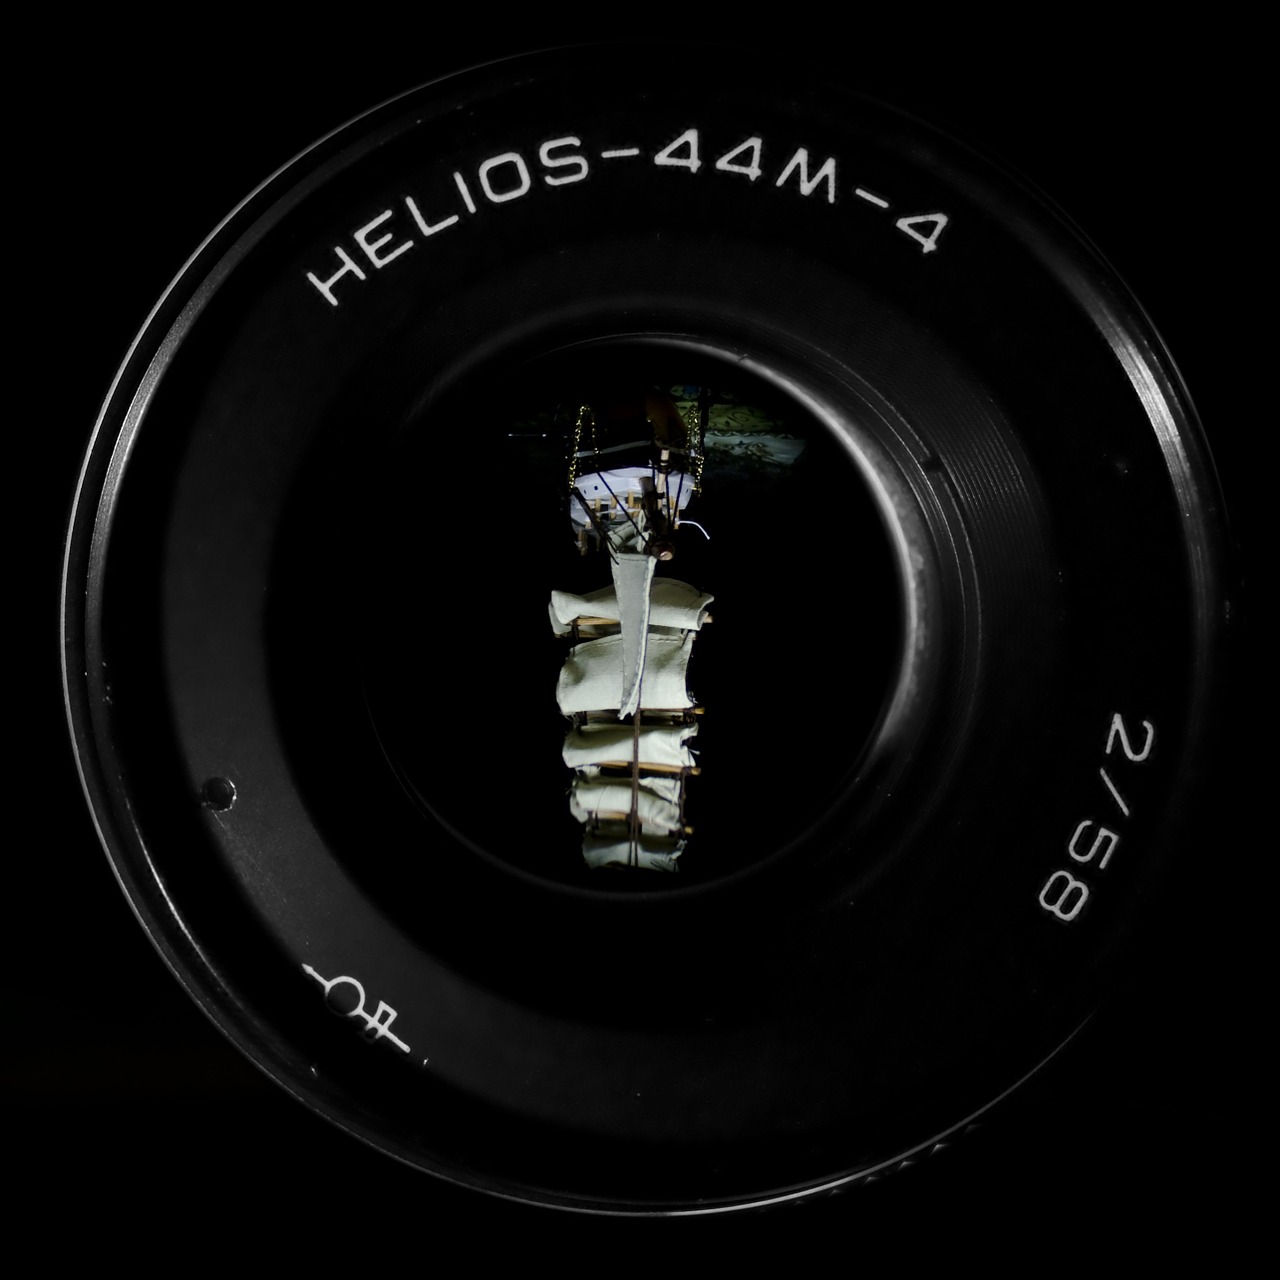 Helios, Objektyvas, Fotografija, Laivas, Fotoaparatas, Nuotrauka, Įrašymas, Kameros Lęšis, Foto Aksesuarai, Fotografas